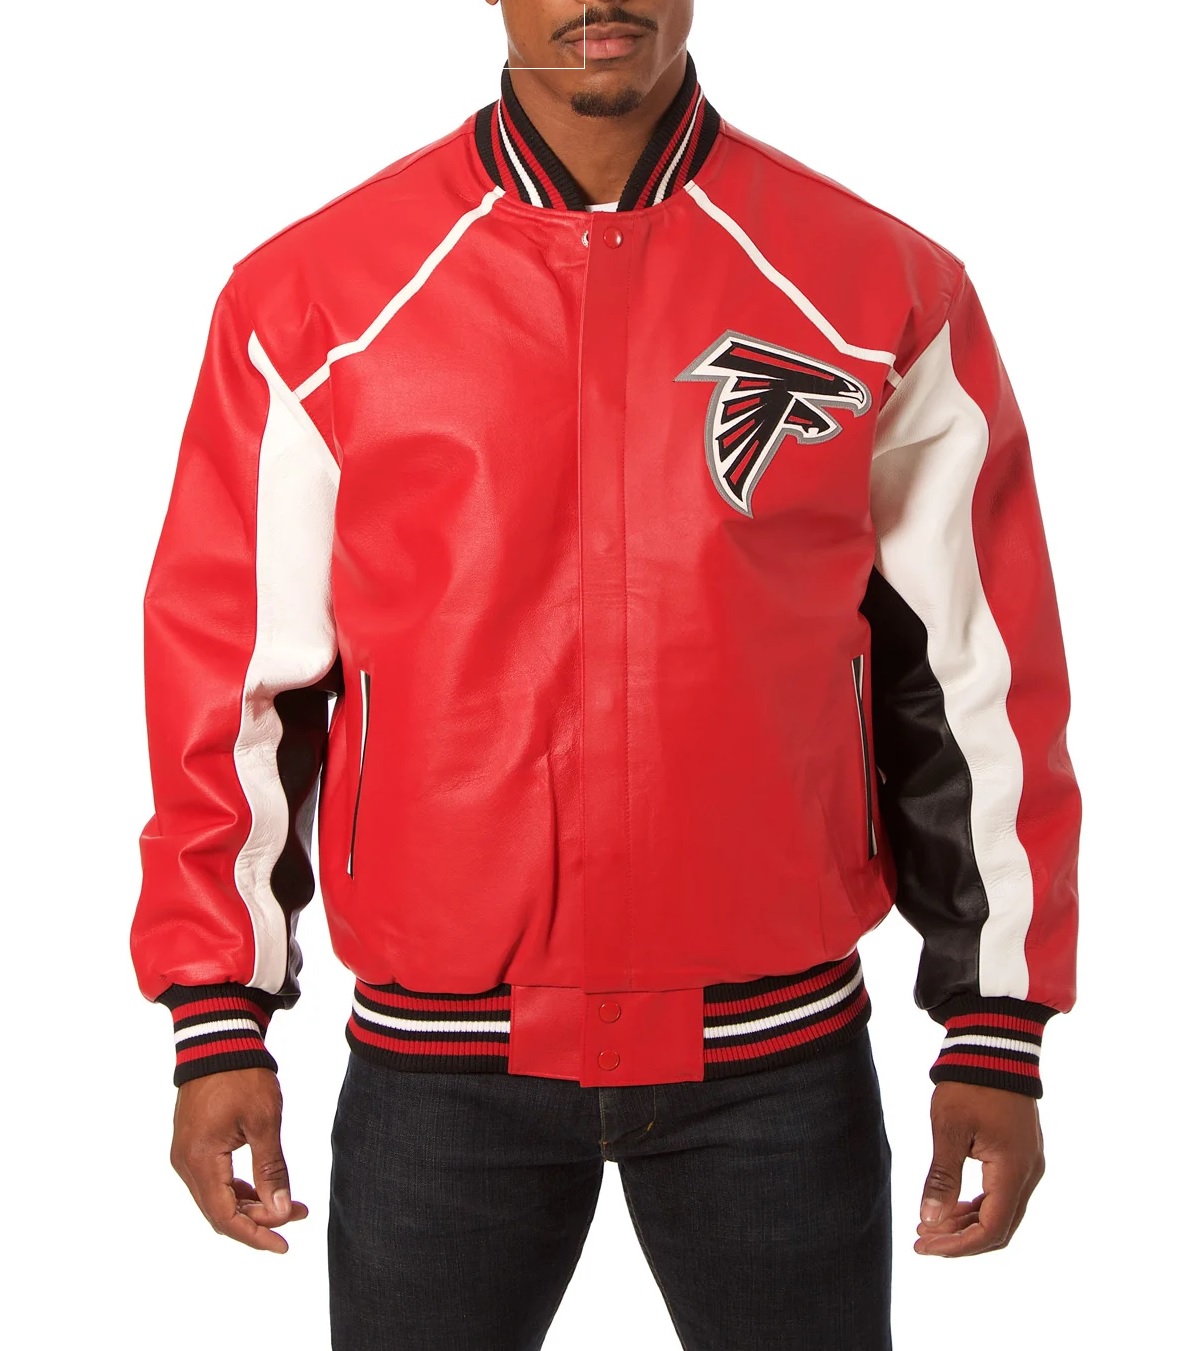 Atlanta Falcons Leather Jacket